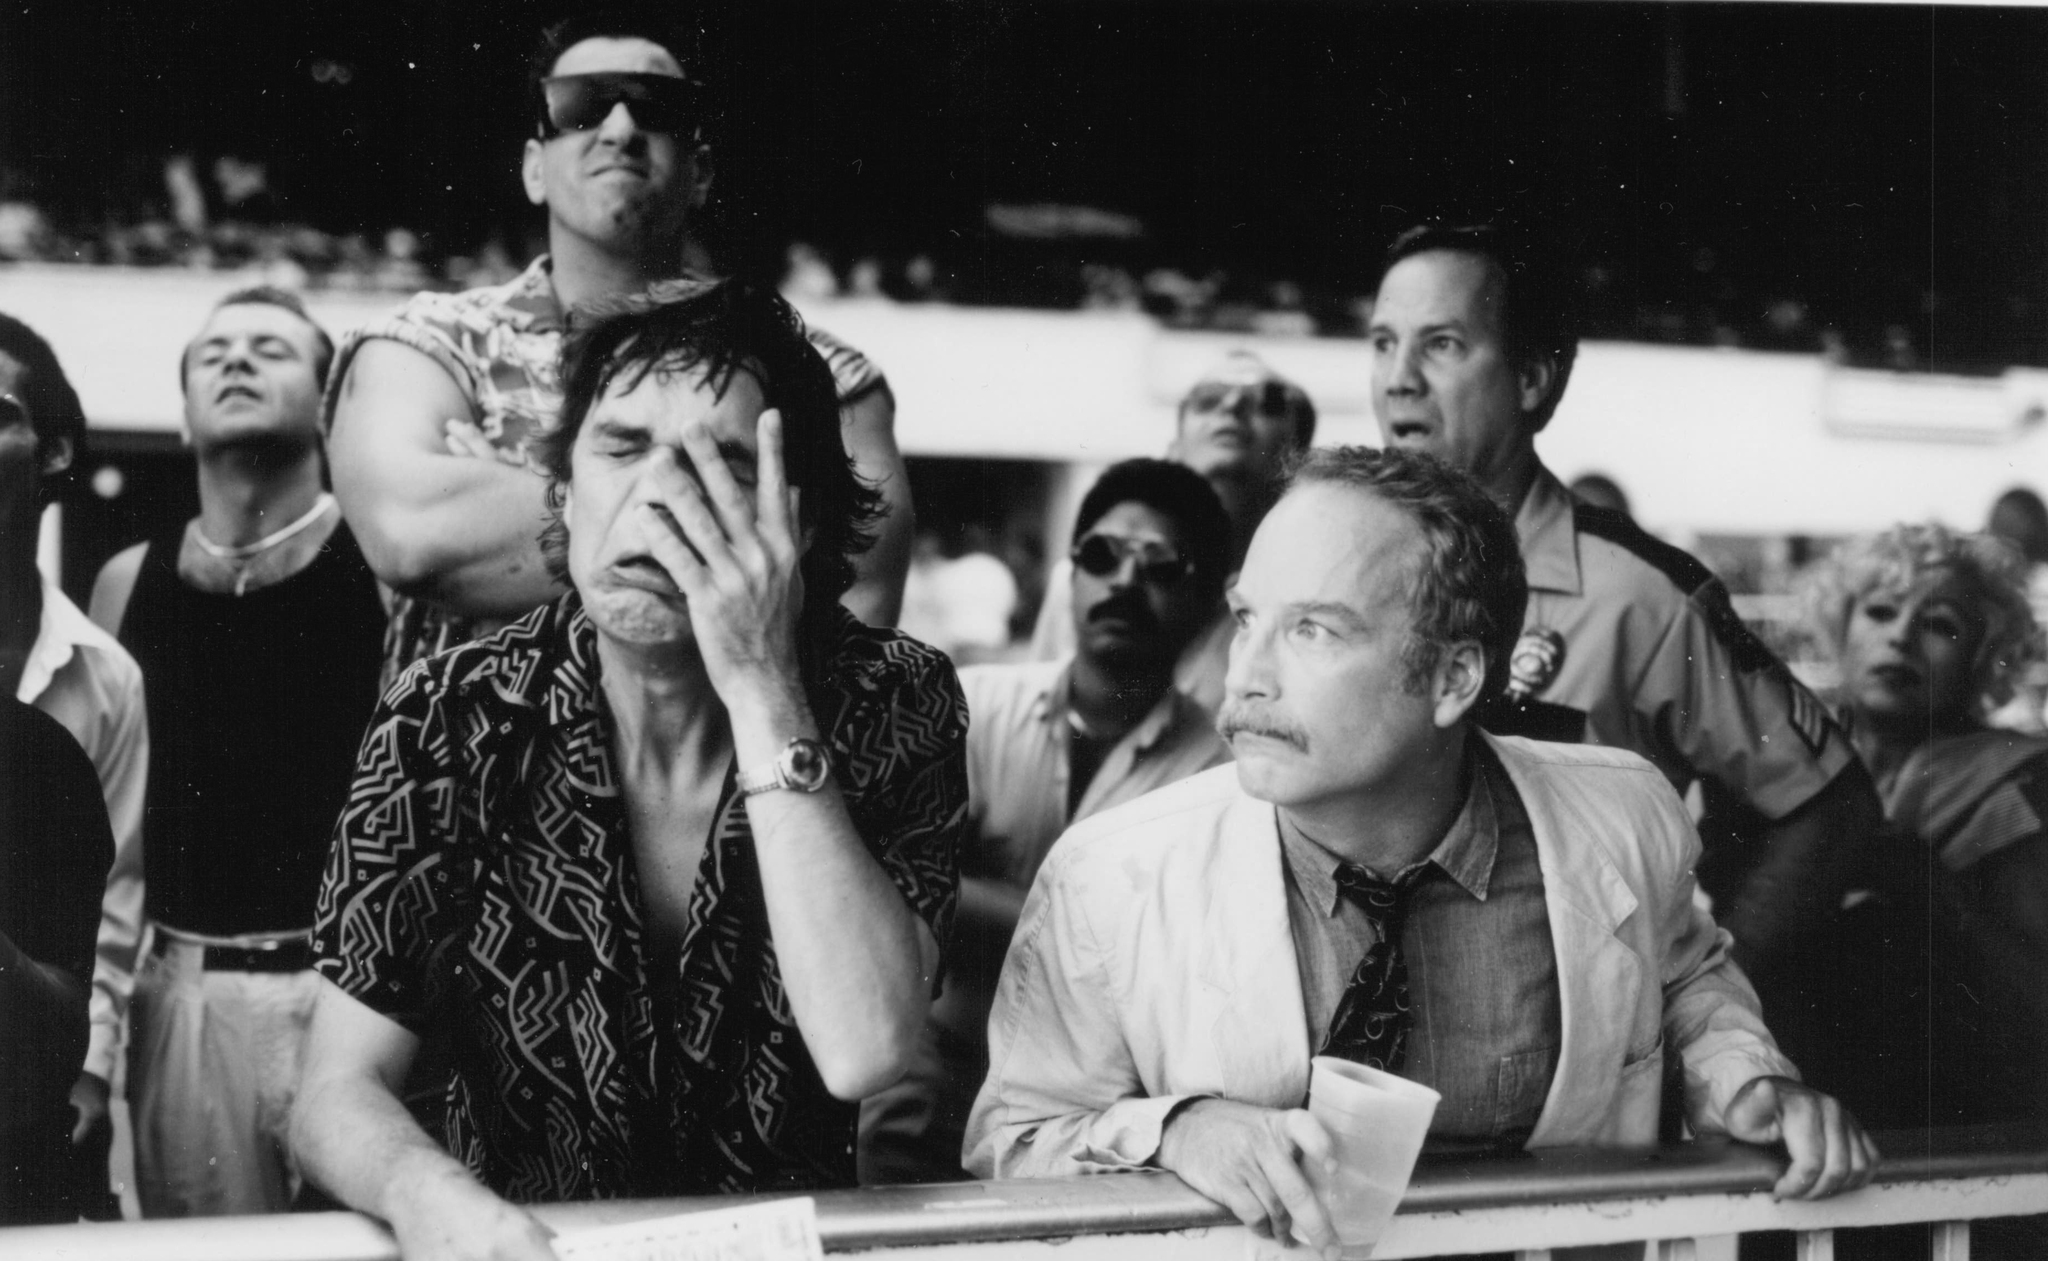 Richard Dreyfuss, David Johansen, and Tony Longo in Let It Ride (1989)